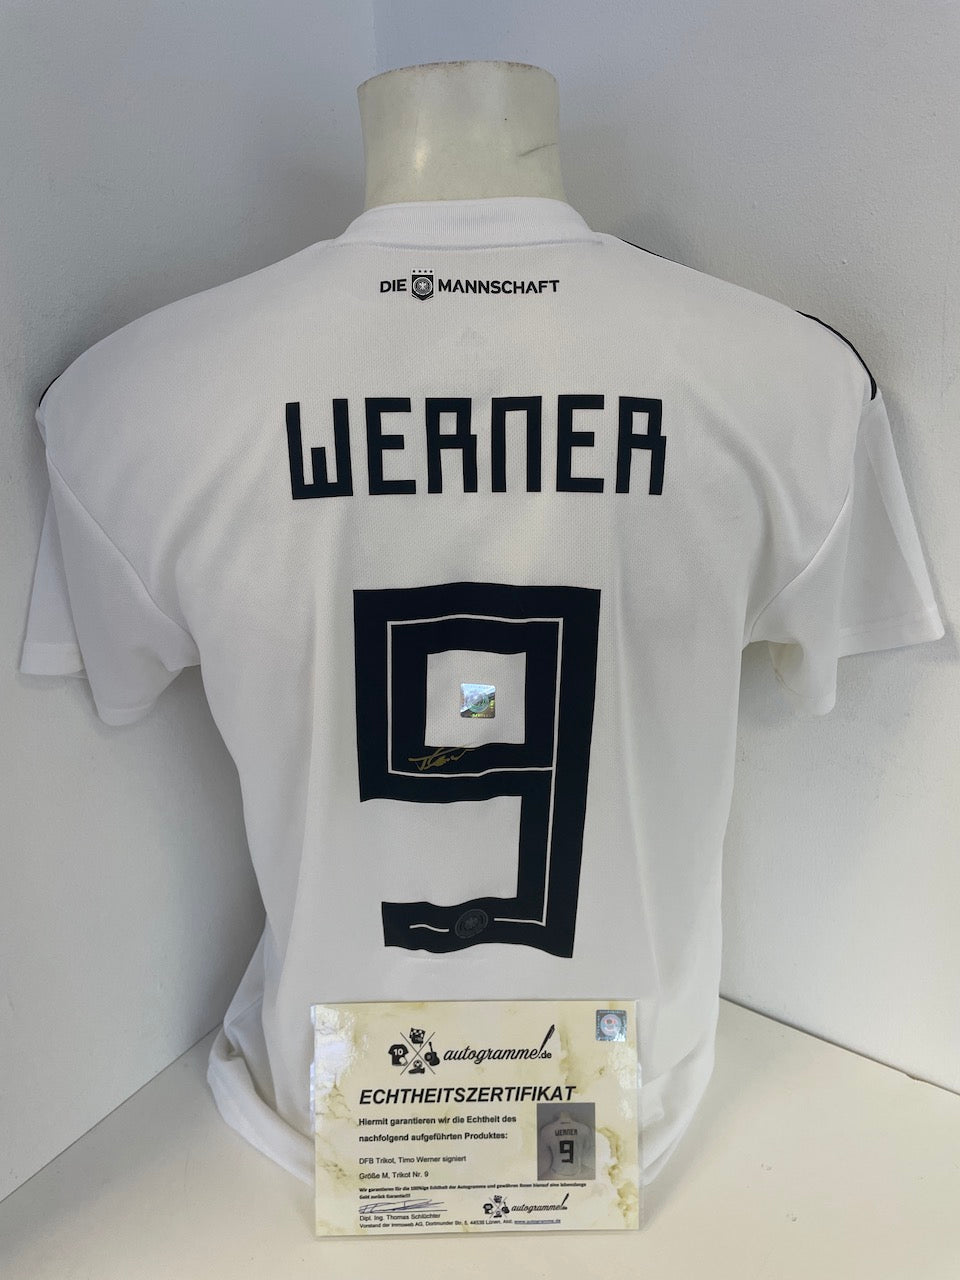 DFB Trikot Timo Werner signiert Adidas COA Deutschland DFB M